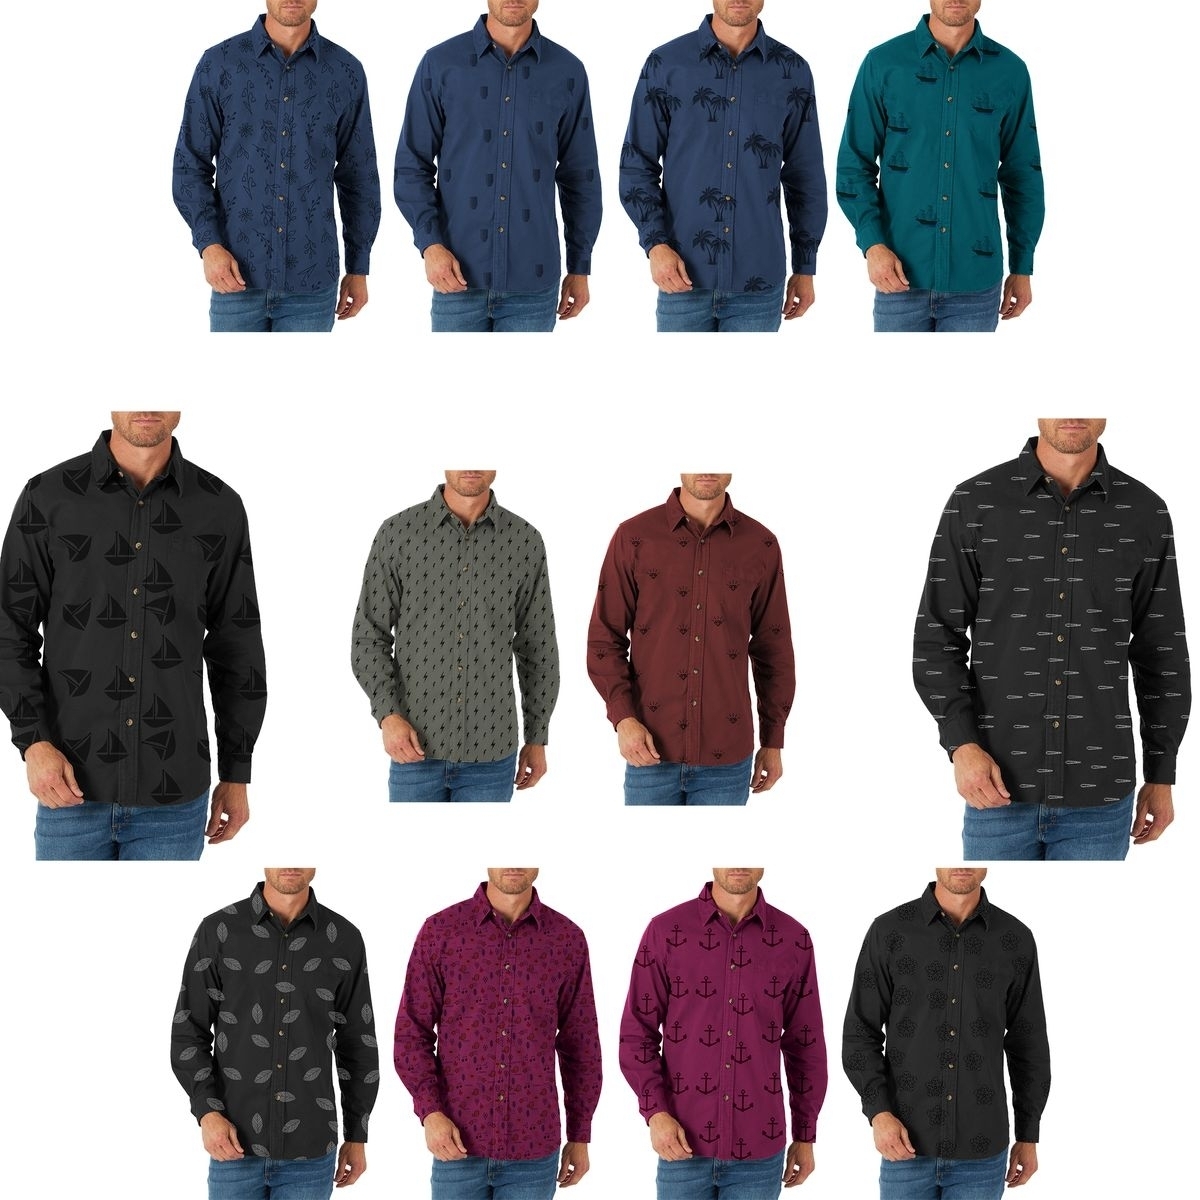 5-Pack: Men's Formal Classic Slim Fit Button Down Long Sleeve Printed Dress Shirt - Medium